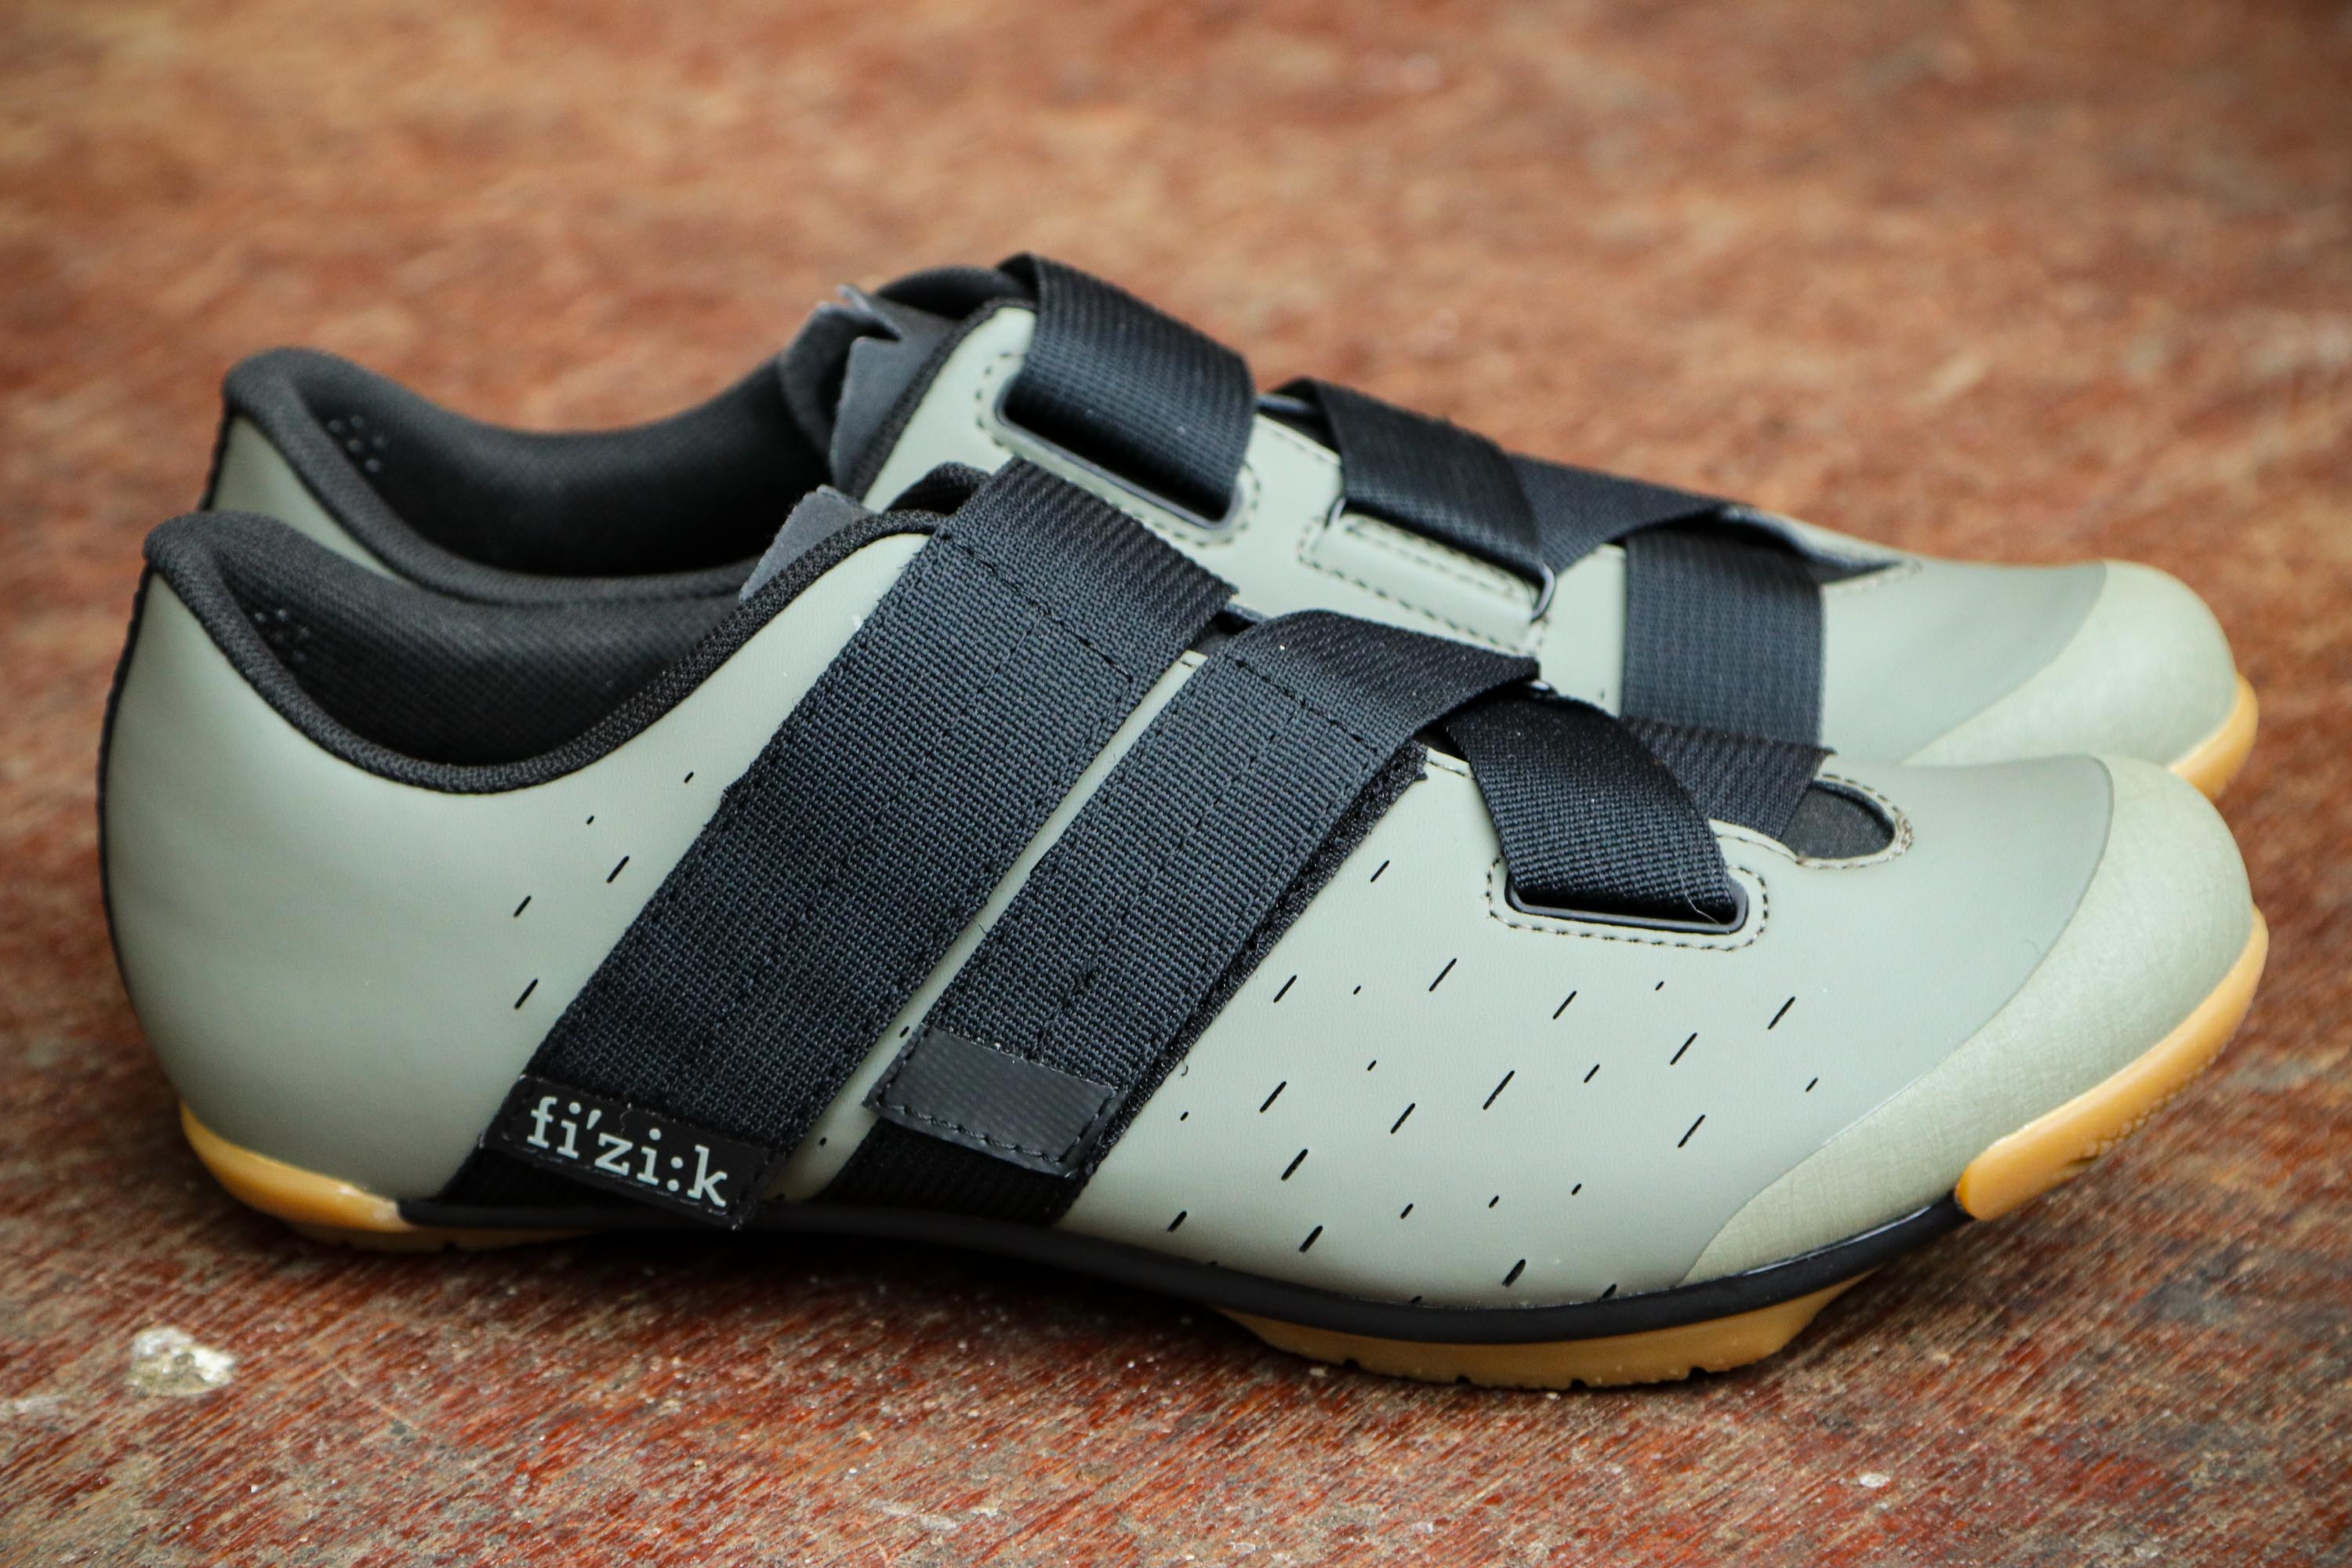 Review: Fizik Terra Powerstrap X4 shoes | road.cc